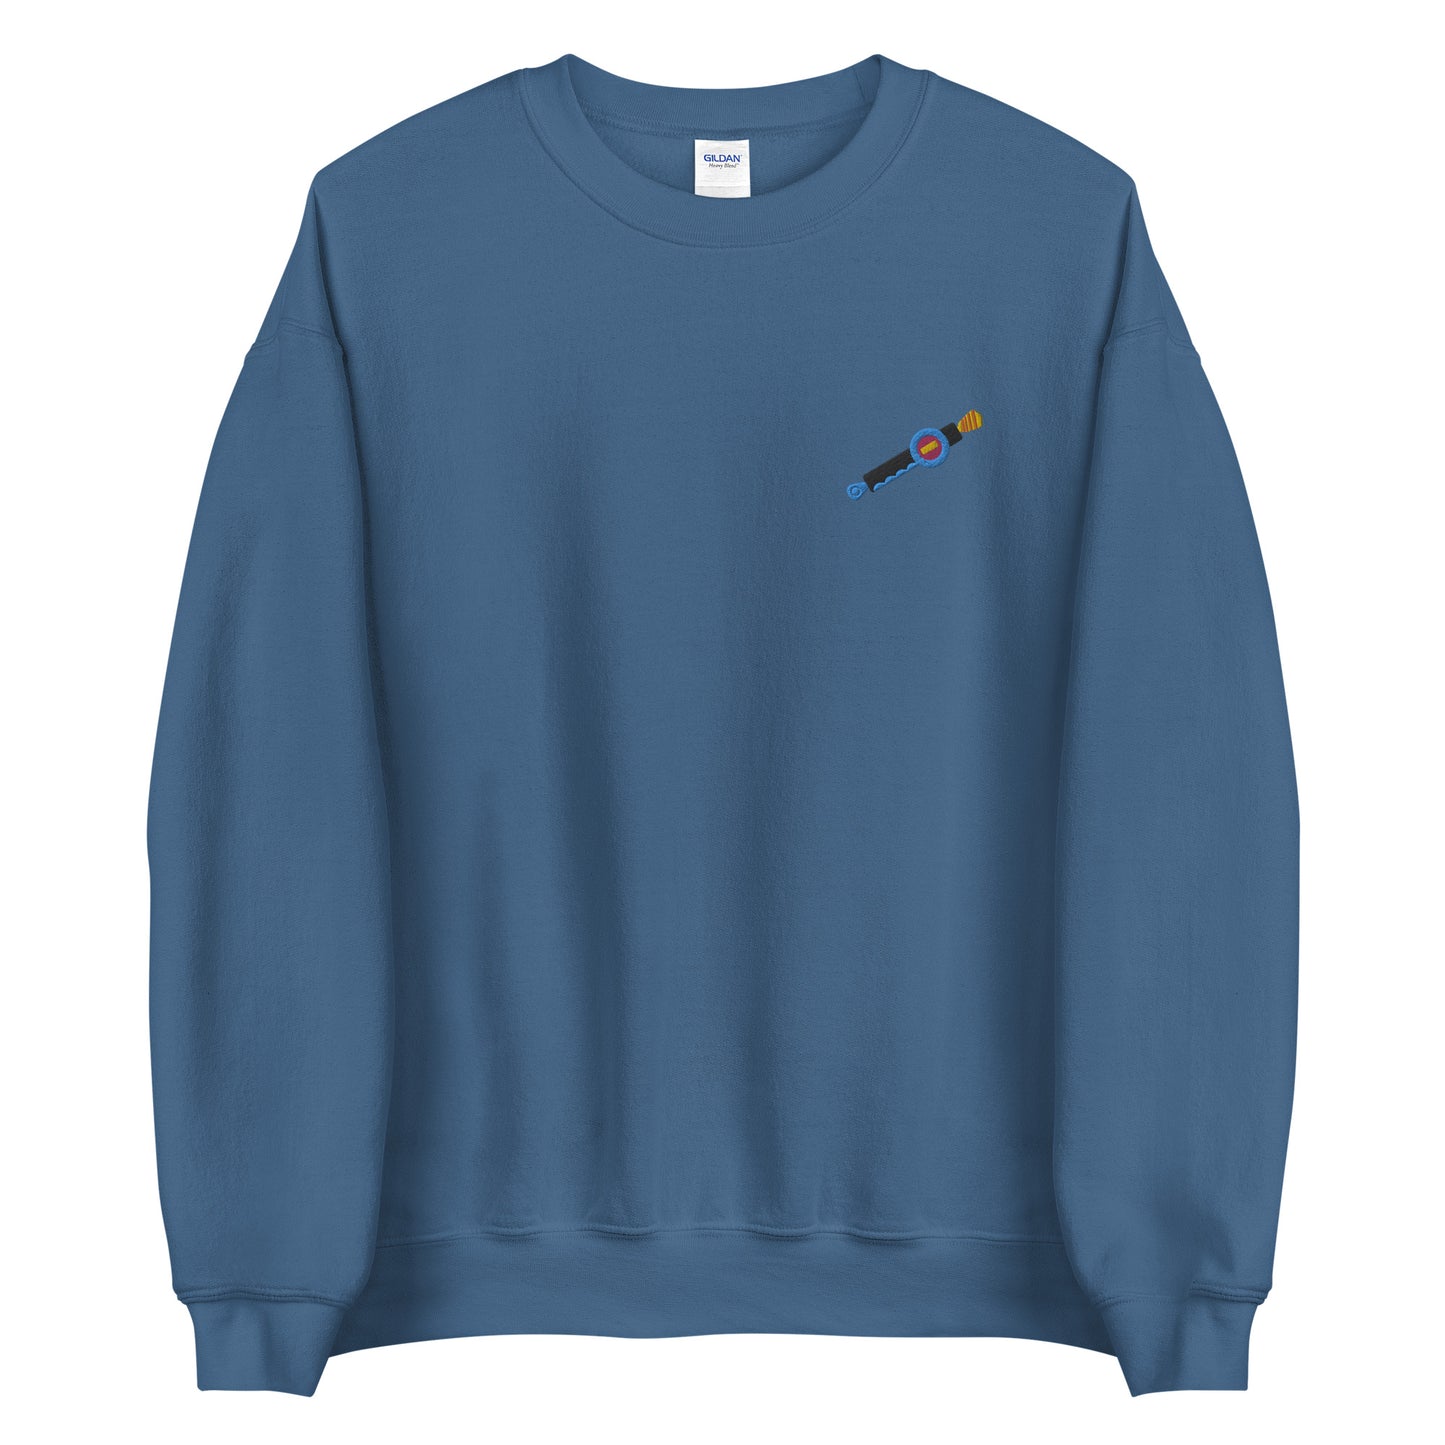 Bop This embroidered crewneck sweatshirt